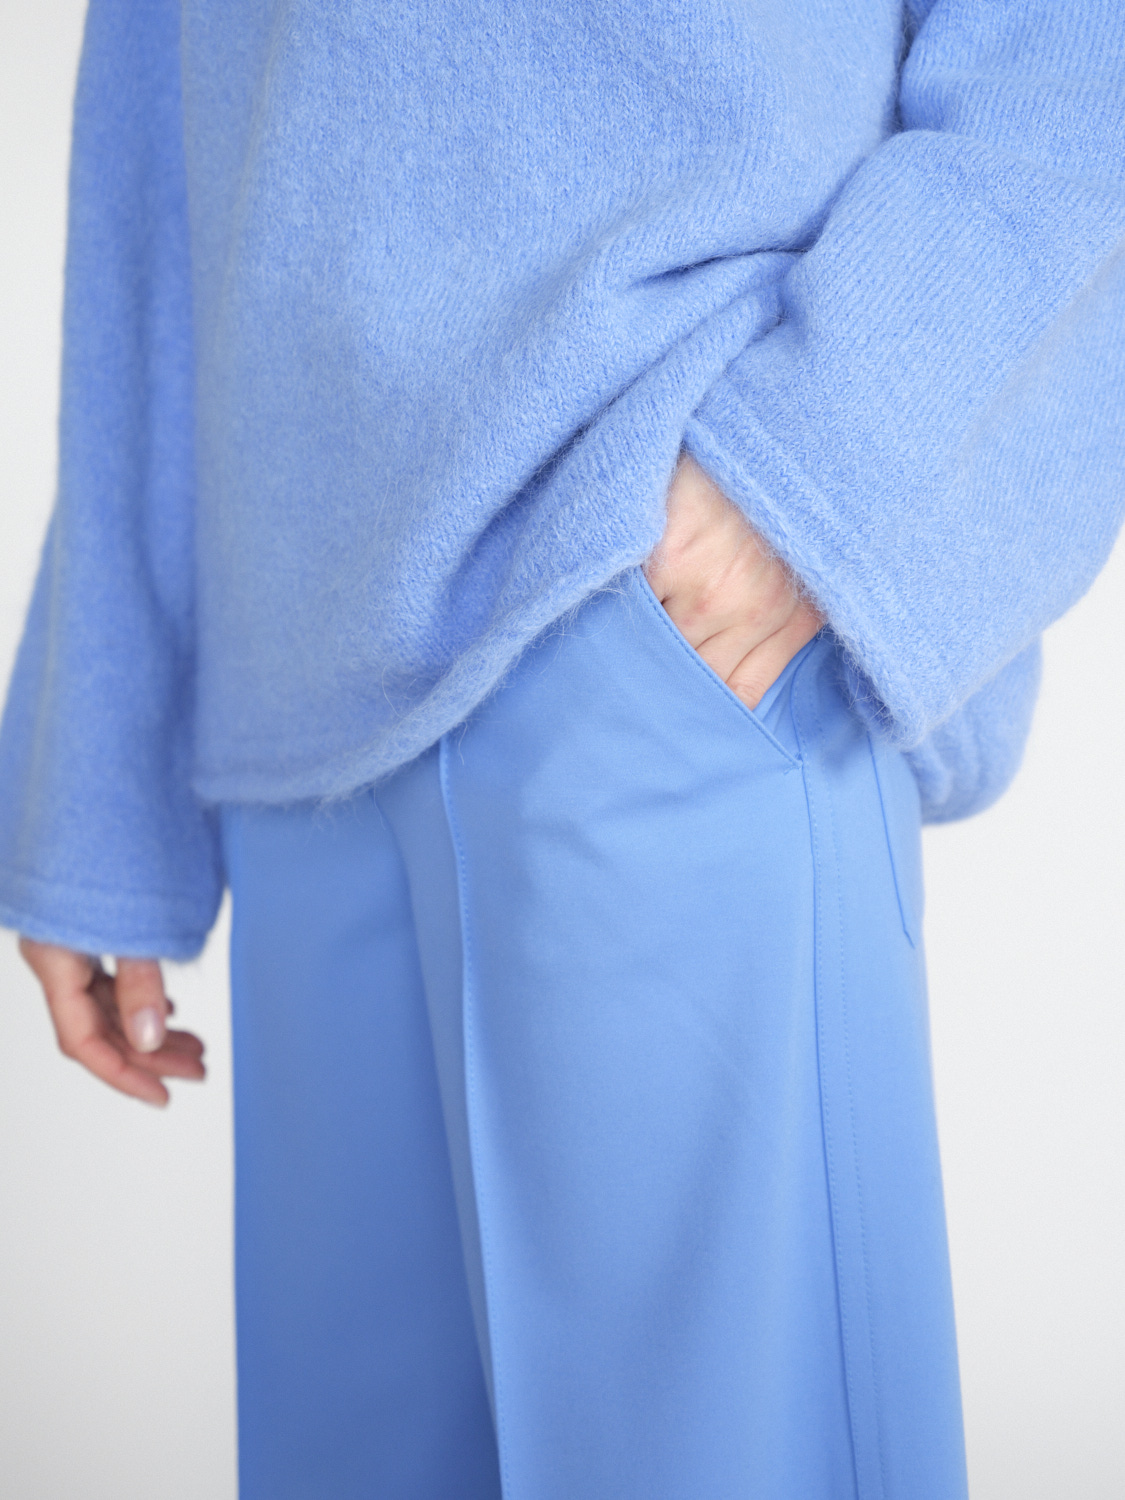 Dorothee Schumacher Cozy Comfort – Oversize Pullover aus Alpaka-Mix  blau XS